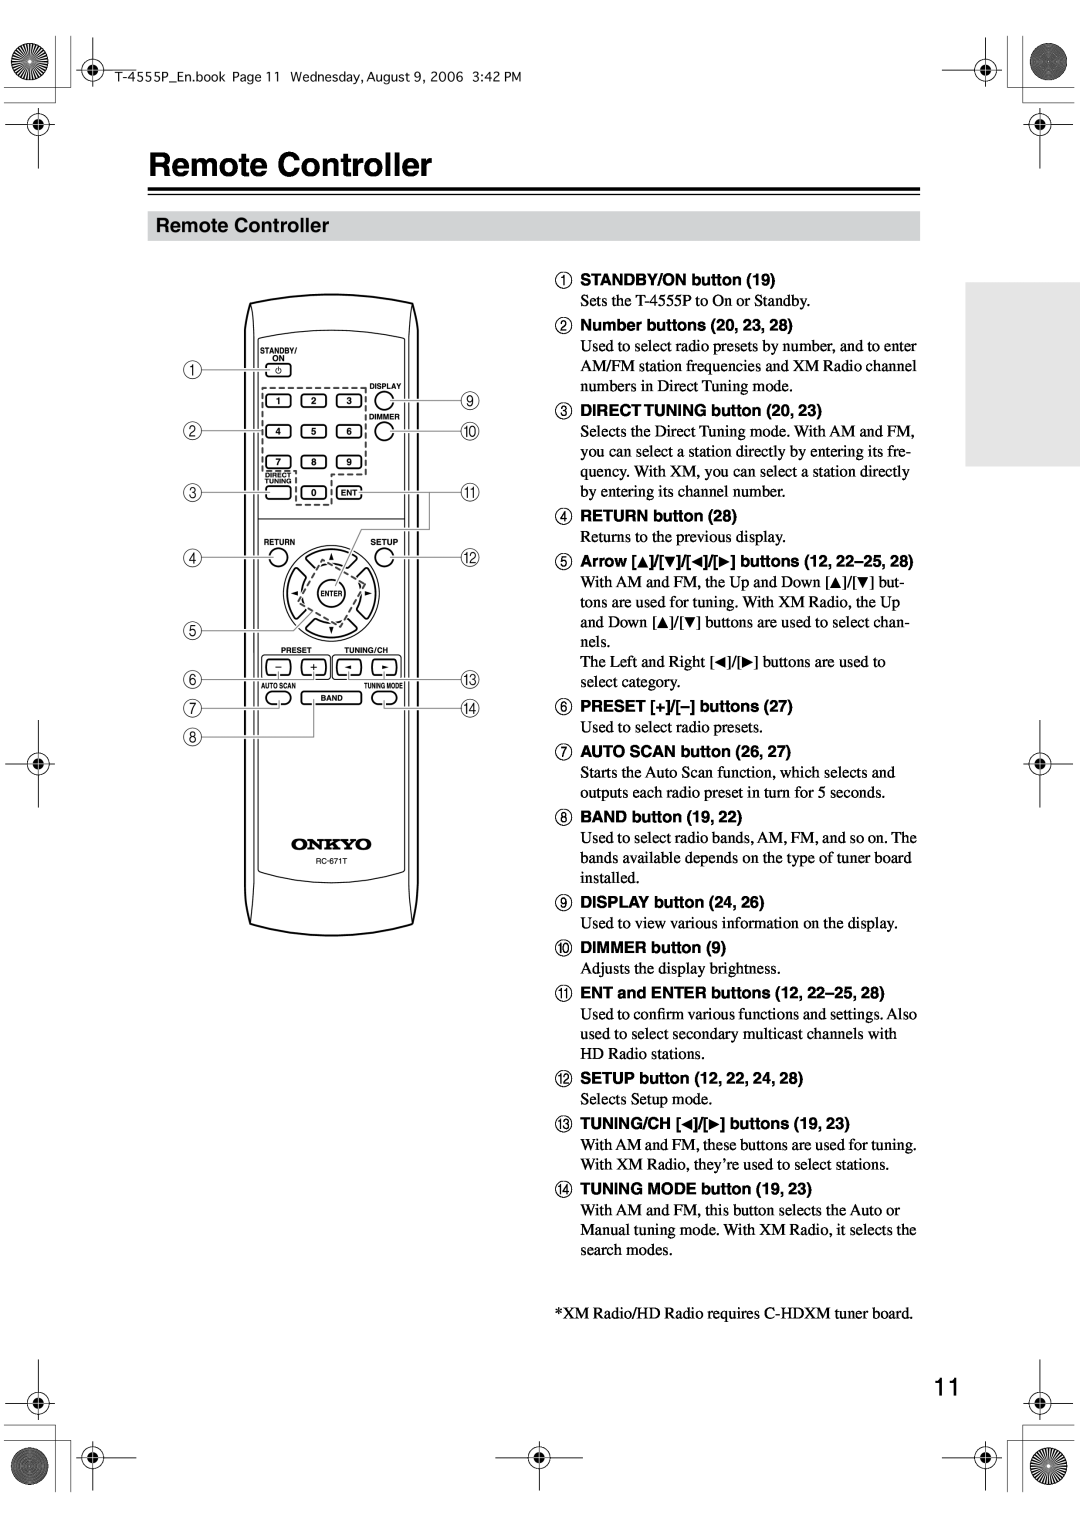 Onkyo T-4555P instruction manual Remote Controller, 1 2 3 4, J K L M N 